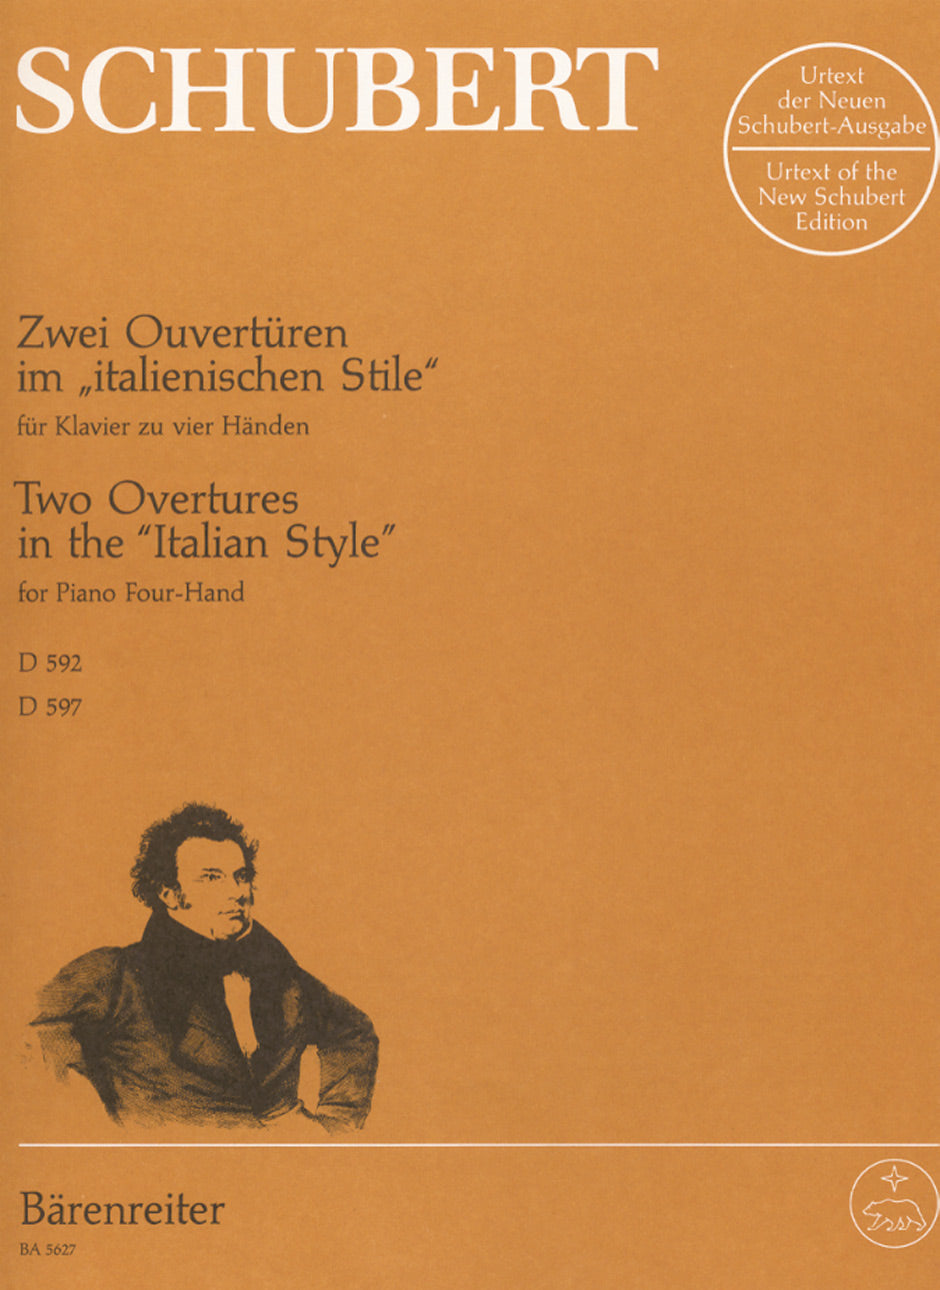 Schubert 2 Overtures in the "Italian Style"